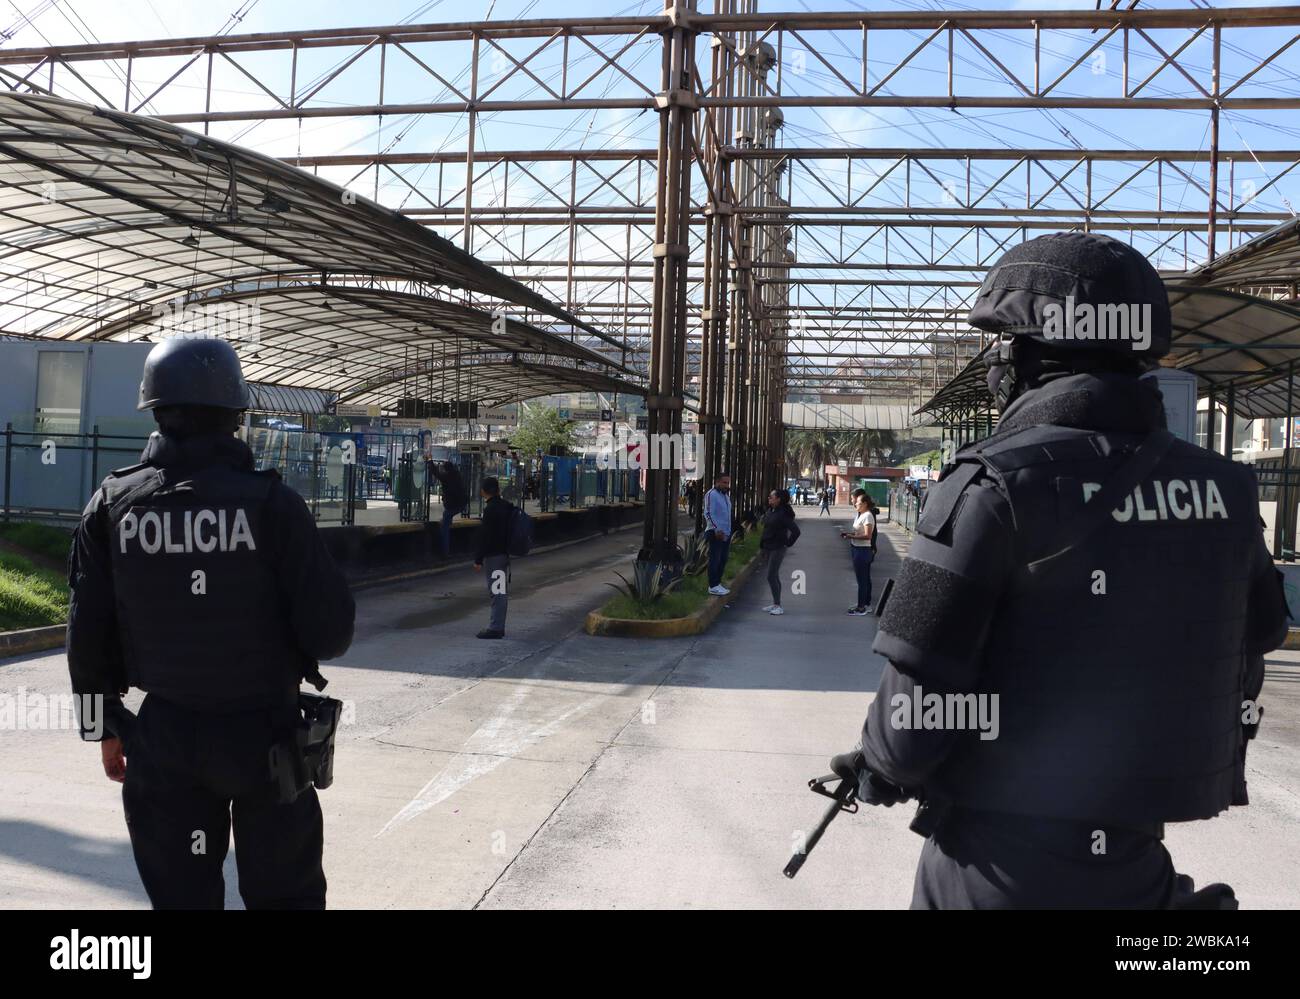 FALSA-ALARMA-BOMBA-PLAYON-MARIN Quito, jueves 11 de enero del 2023 Operativo de bomba en el Playon de la Marin, por parte de la policia que descarto como falsa alarma. Fotos:Rolando Enriquez/API Quito Pichincha Ecuador CLJ-FALSA-ALARMA-BOMBA-PLAYON-MARIN-4a094ce9b1ab5aa7cffcea42ed48f6a8 *** FALSE ALARM BOMB BOMB PLAYON MARIN Quito, Thursday, January 11, 2023 Bomb operation in the Playon de la Marin, by the police who dismissed it as a false alarm Photos Rolando Enriquez API Quito Pichincha Ecuador CLJ FALSE ALARM BOMB PLAYON MARIN 4a094ce9b1ab5aa7cffcea42ed48f6a8 Copyright: xROLANDOxENRIQUEZx Stock Photo